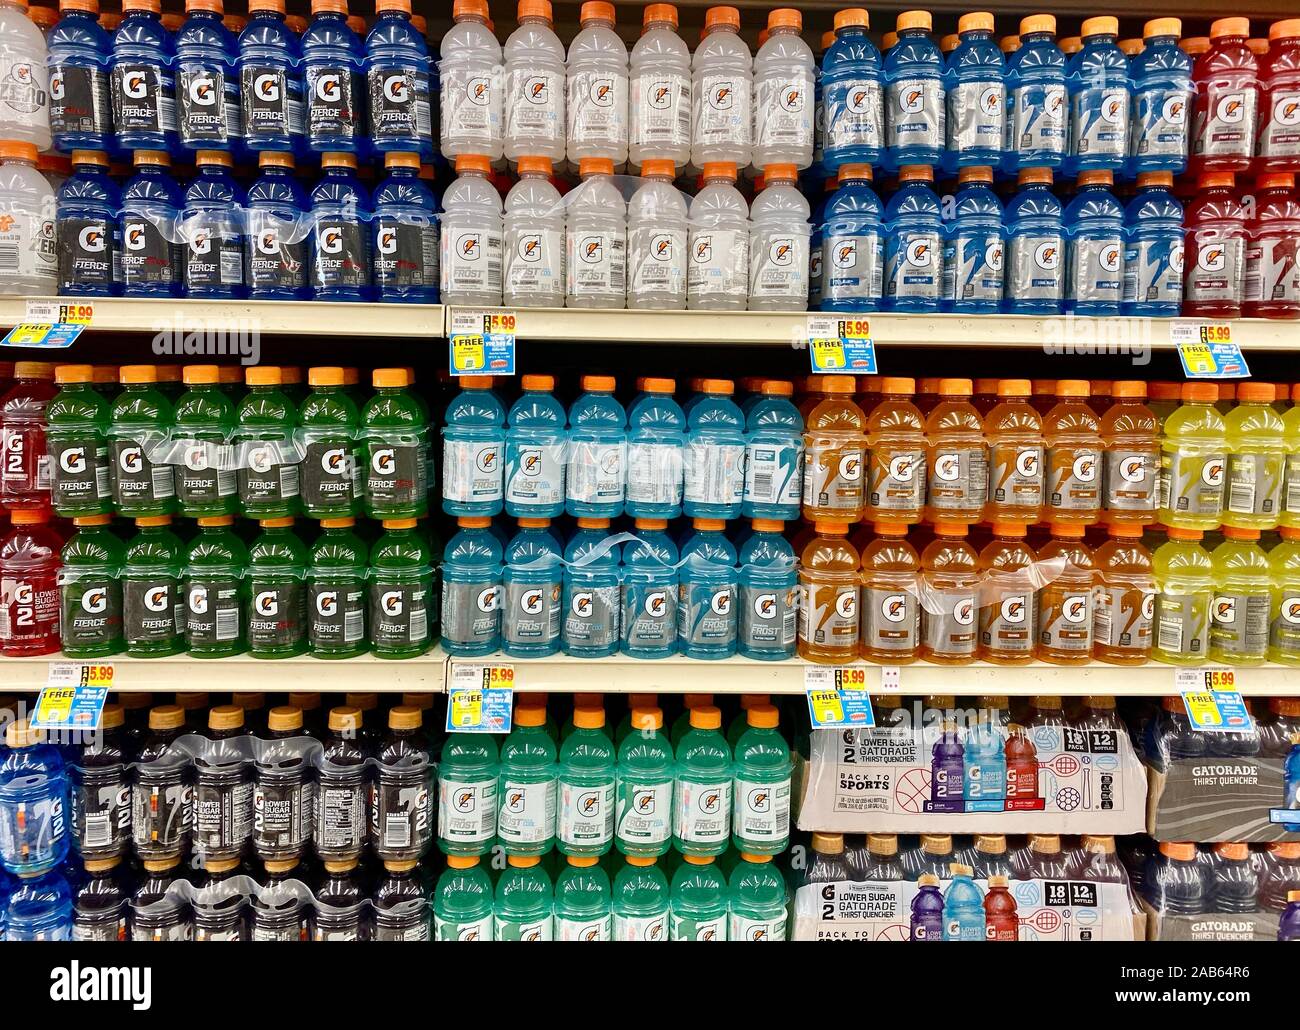 Variety of Gatorade bottles on a grocery store shelf Stock Photo